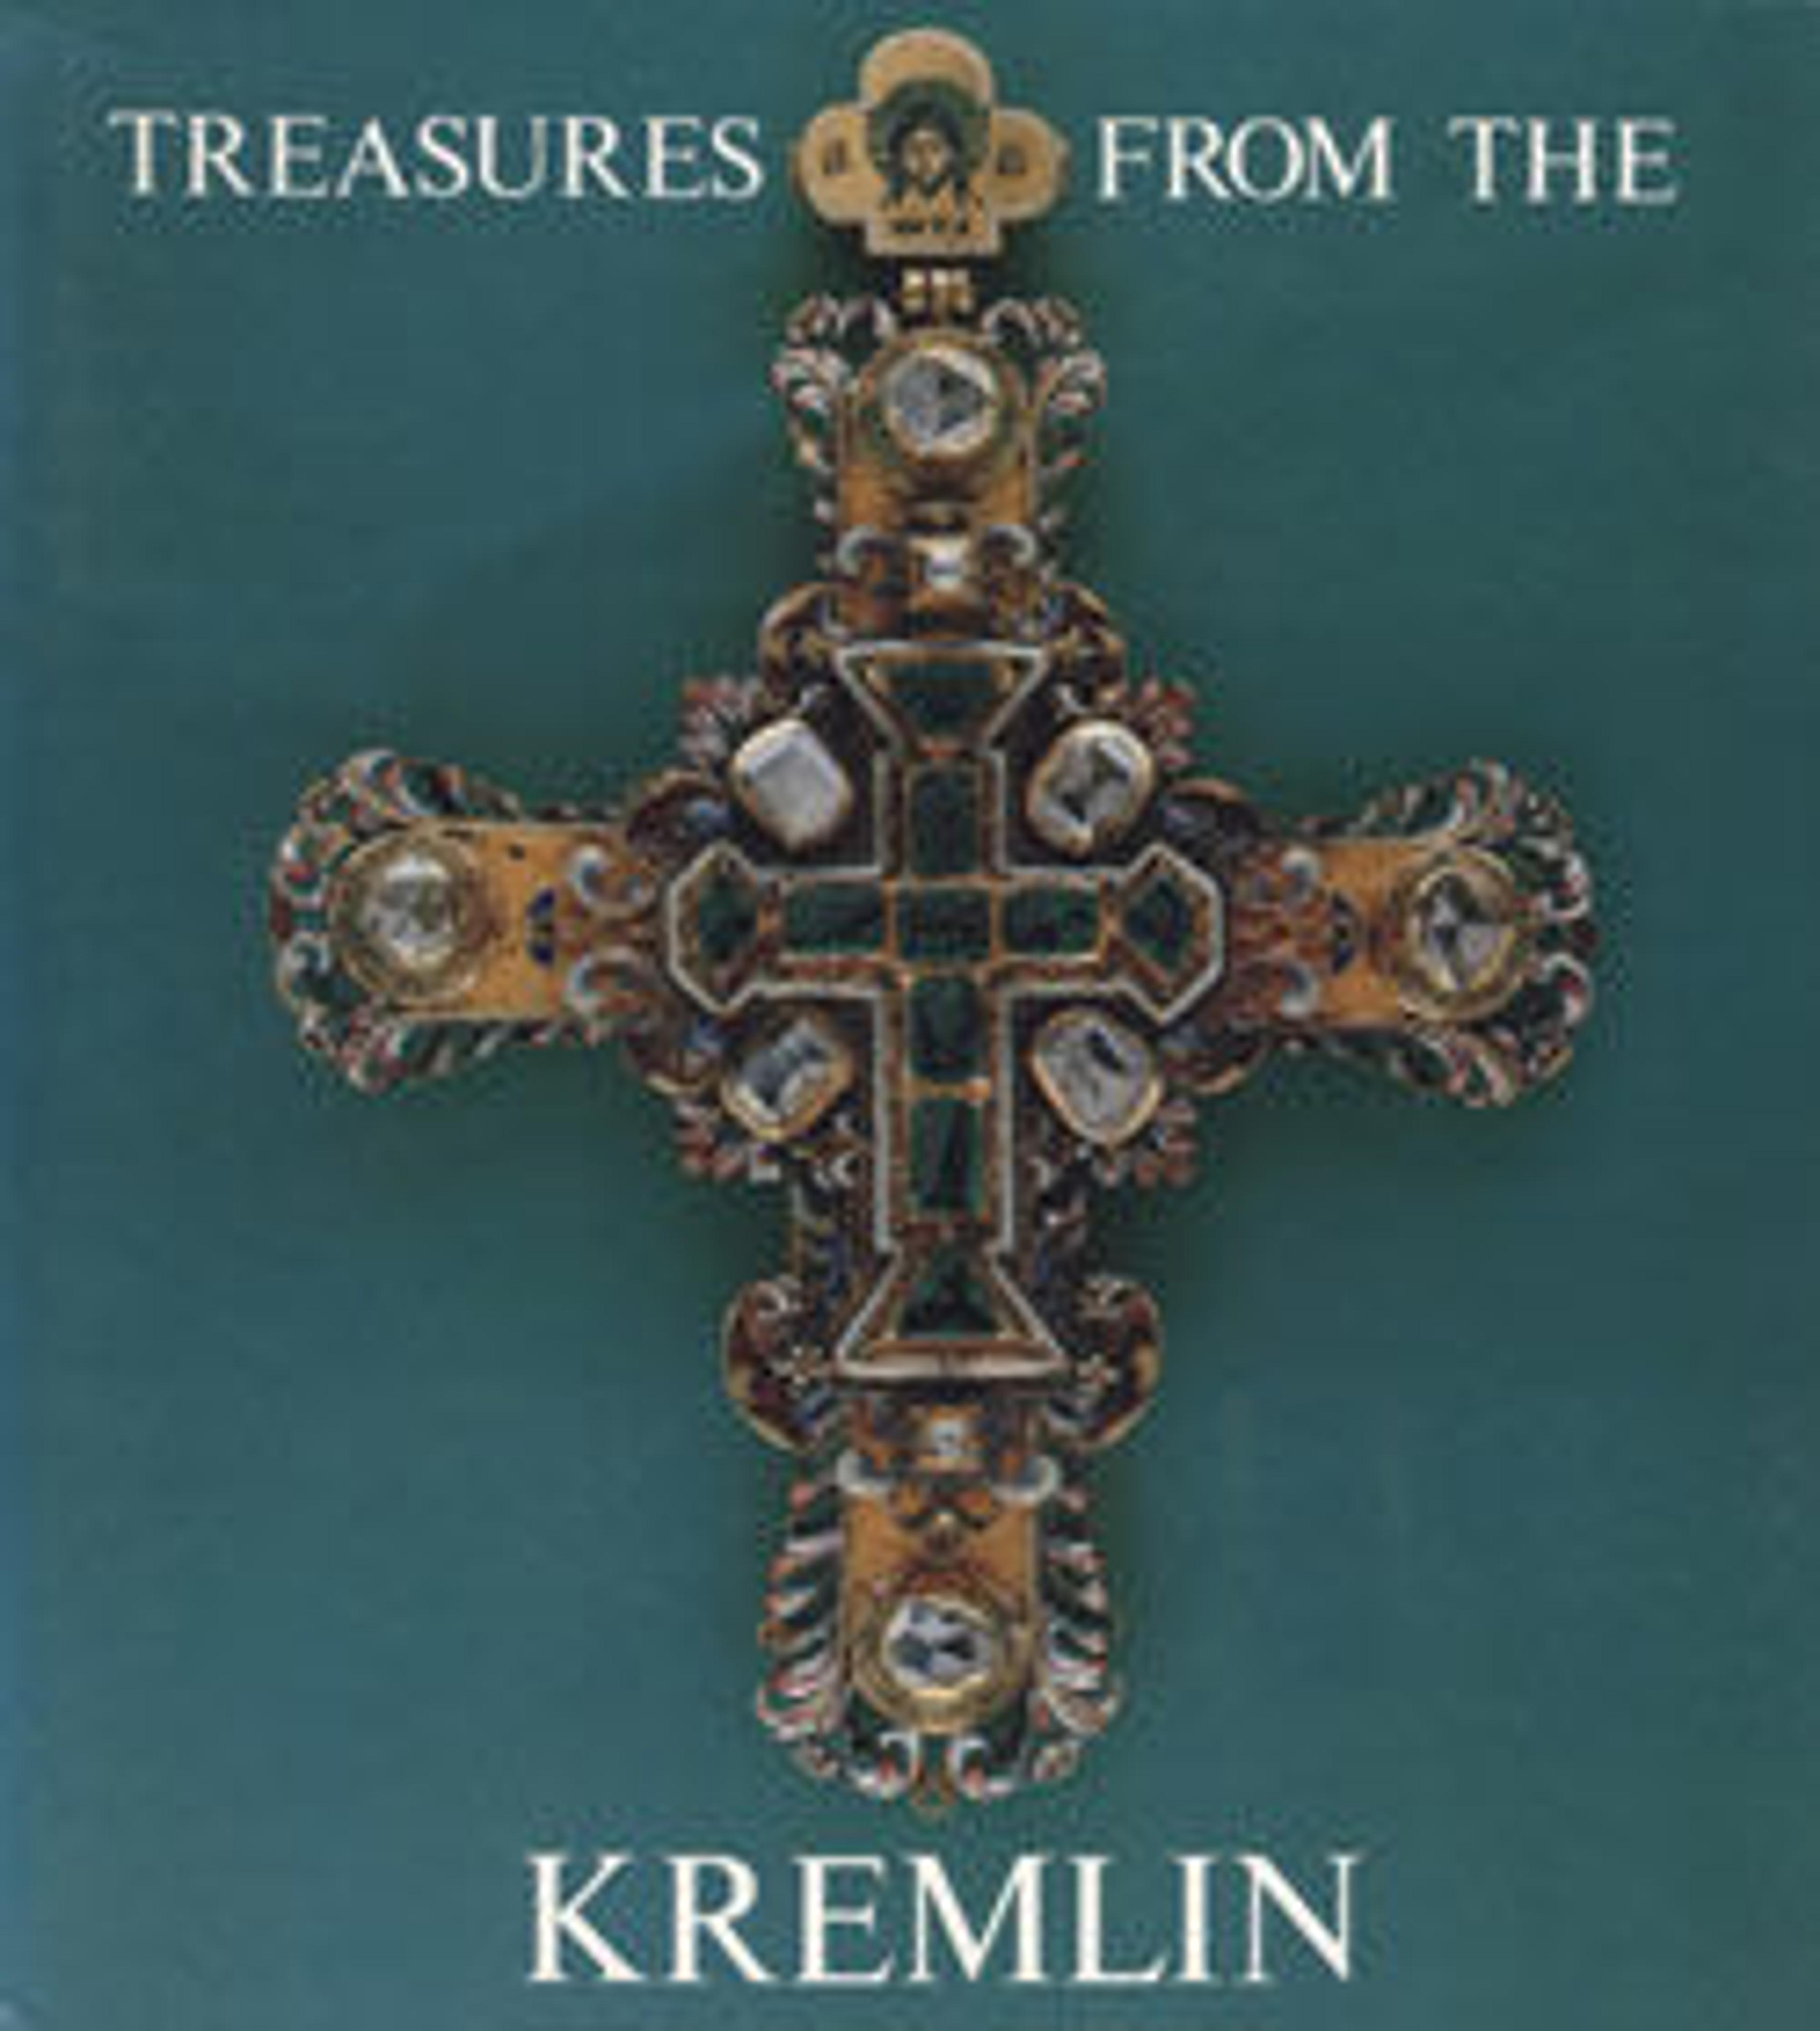 Treasures from the Kremlin